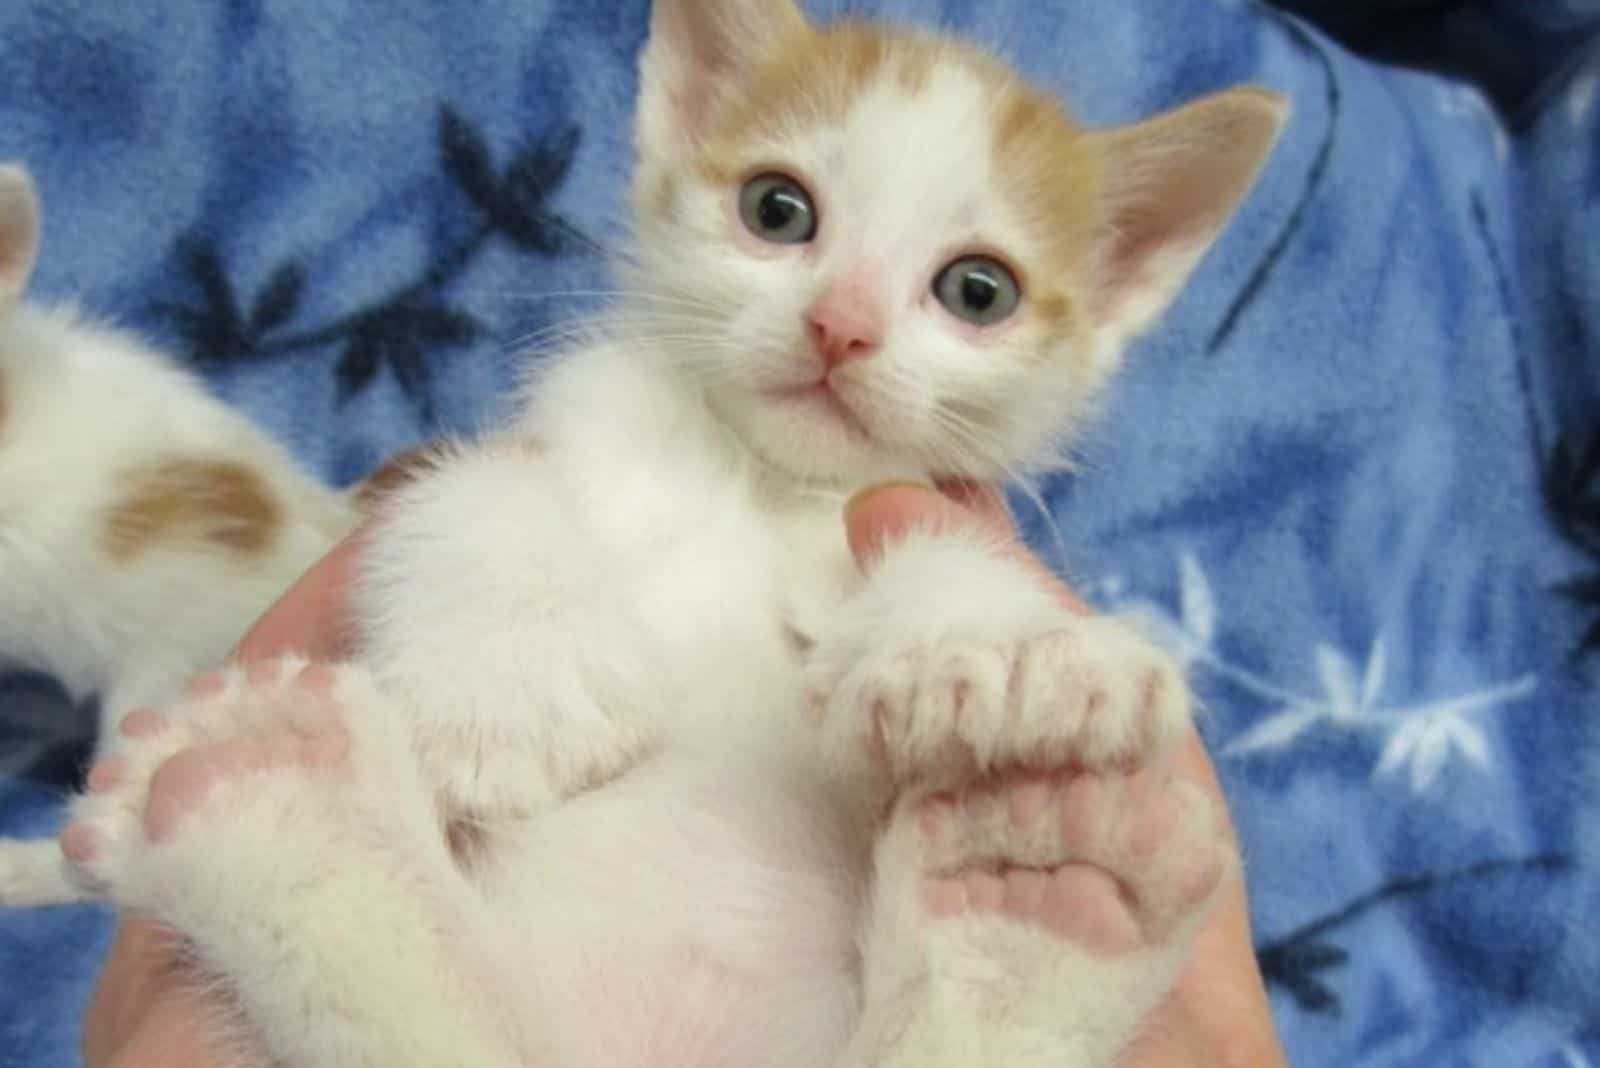 kitten with open eyes in owner's hands